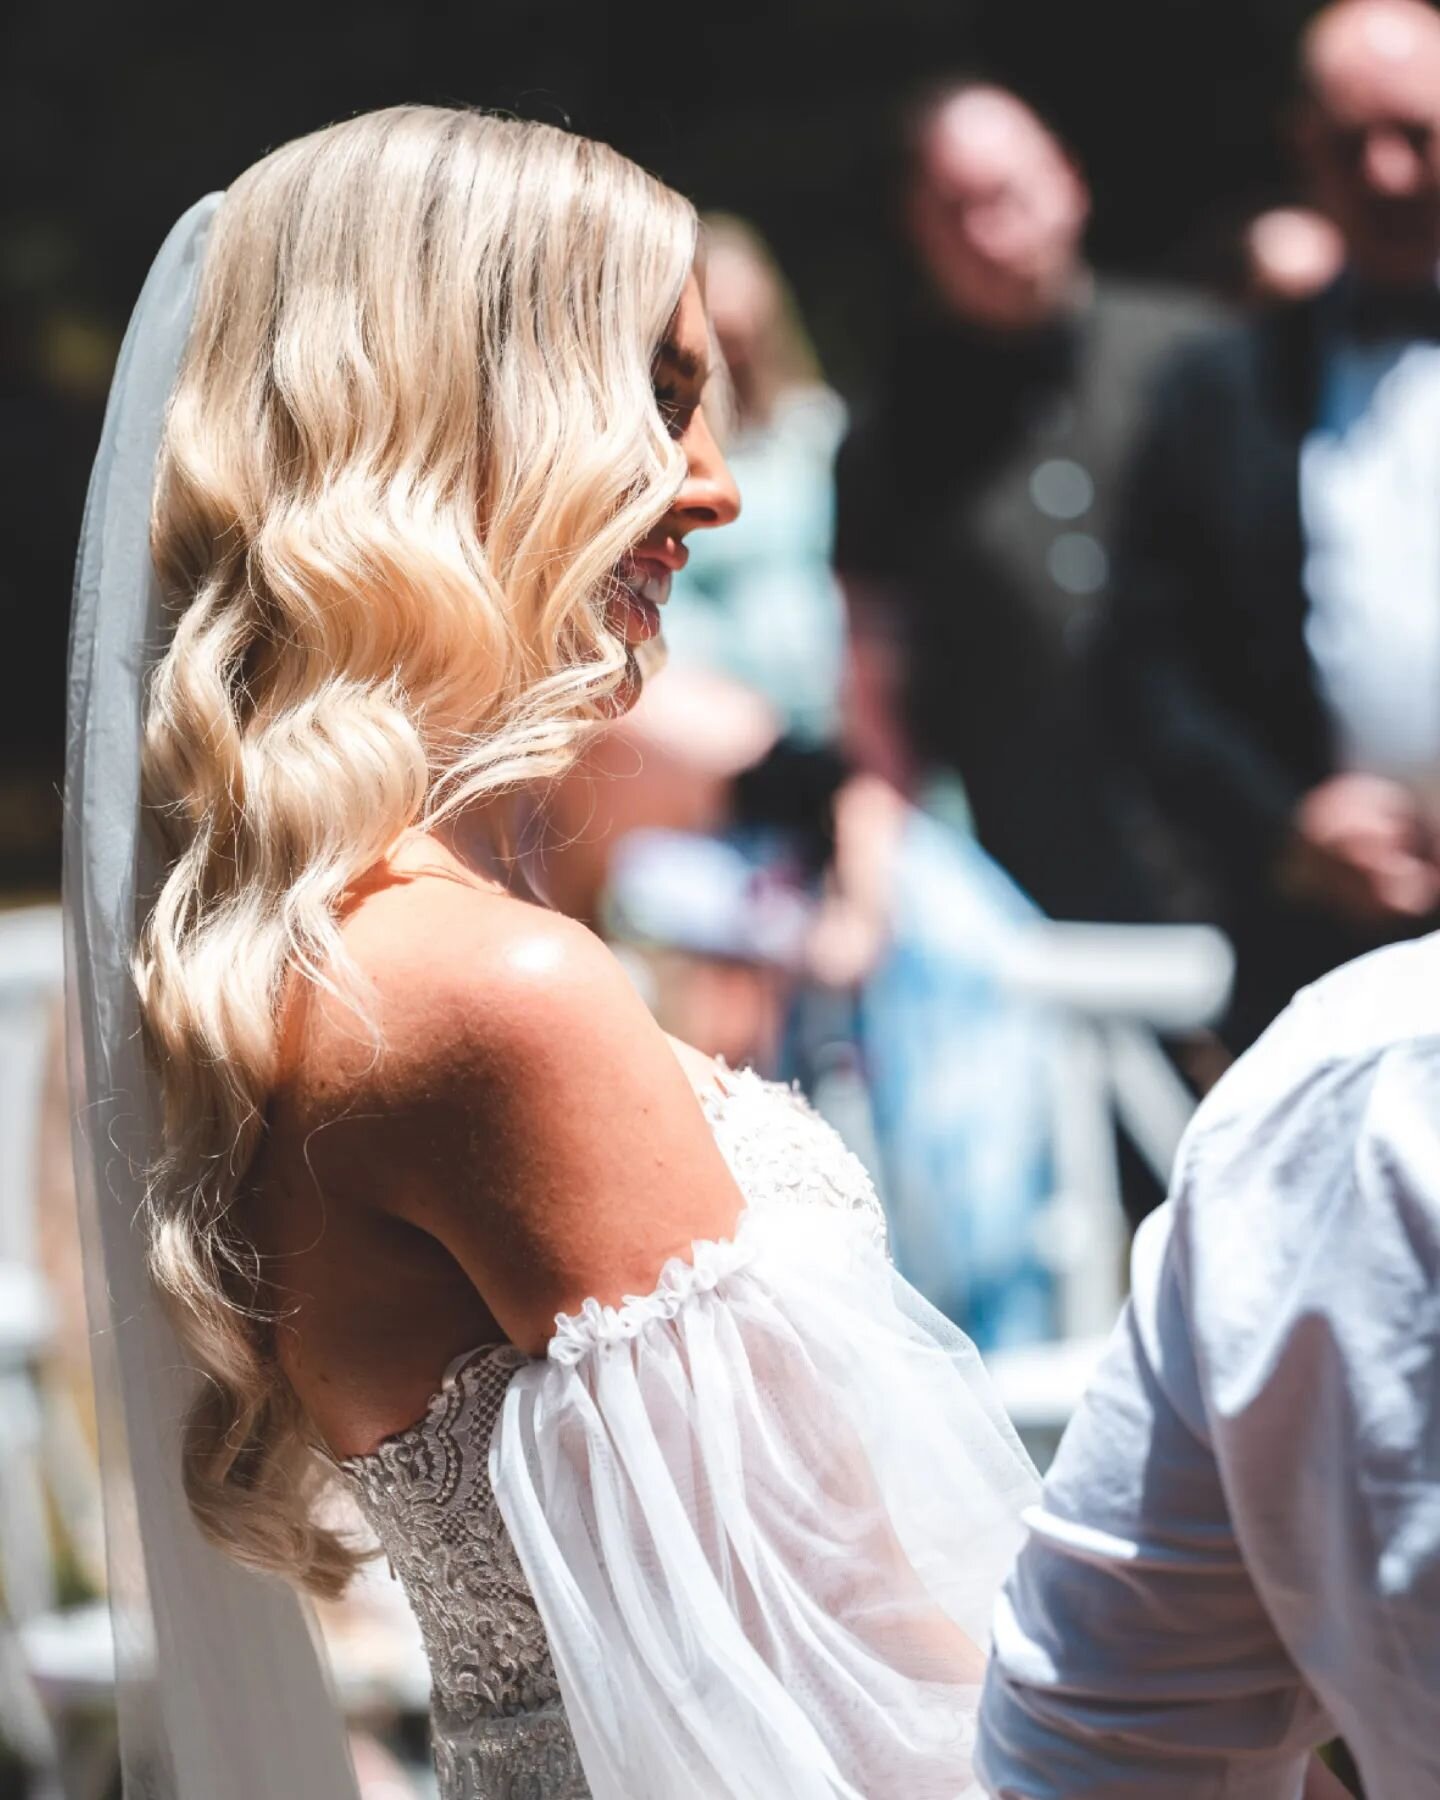 Priceless emotions 💍
.
.
.
.
.
#weddings #weddingphotography #weddingphotographymelbourne #Melbourneweddings #nikonphotography #love #Melbourne photography #weddingphotographer #Melbourneweddingphotographer